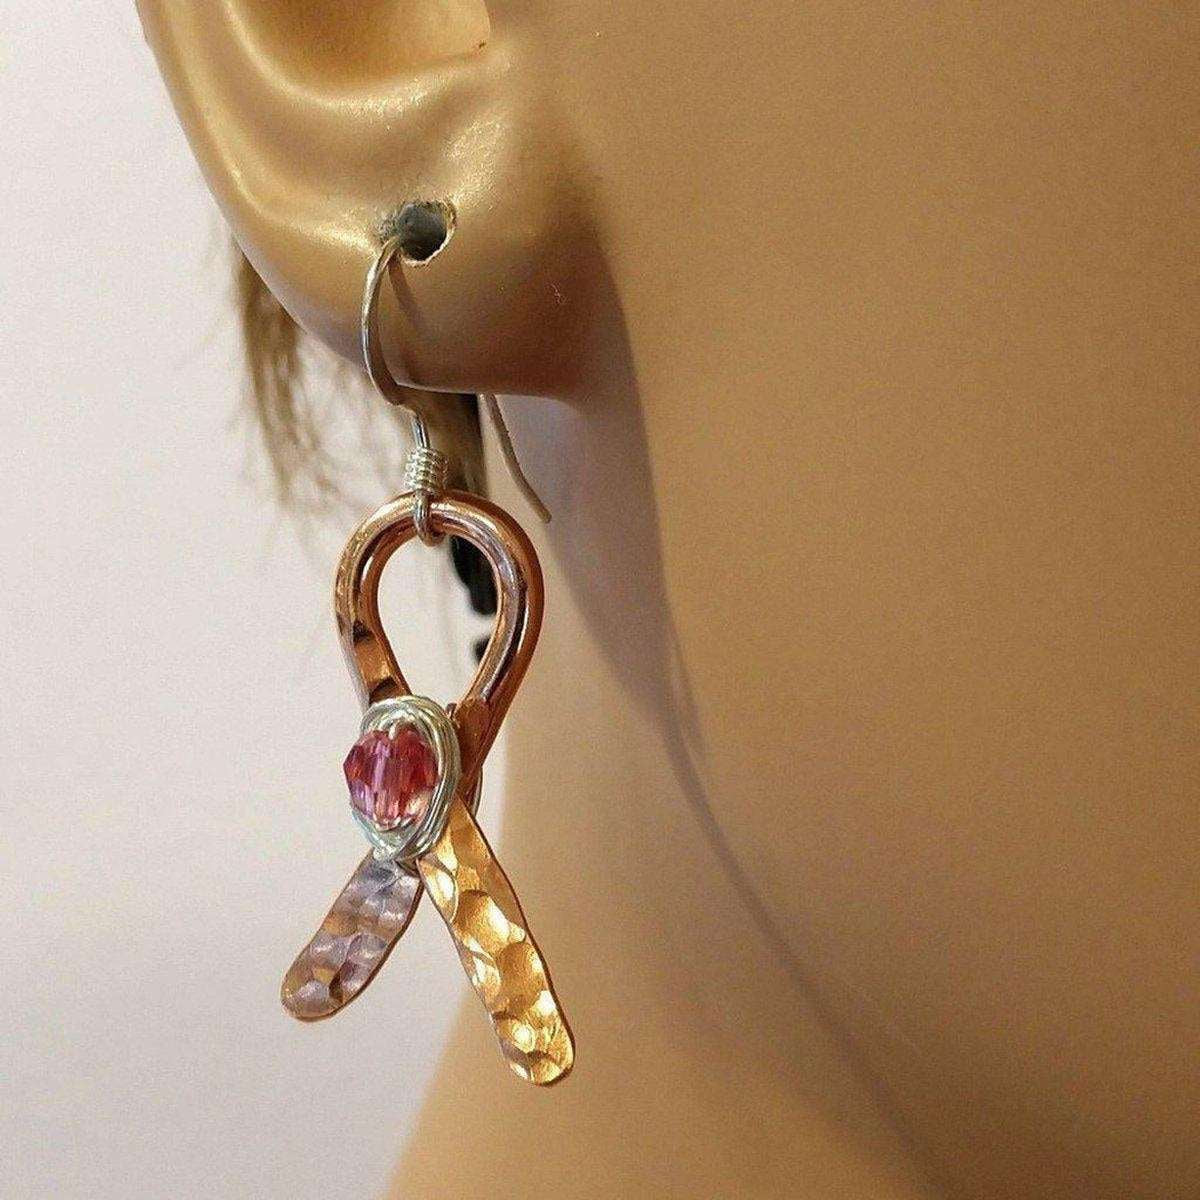 Copper Breast Cancer Awareness Ribbon Earrings